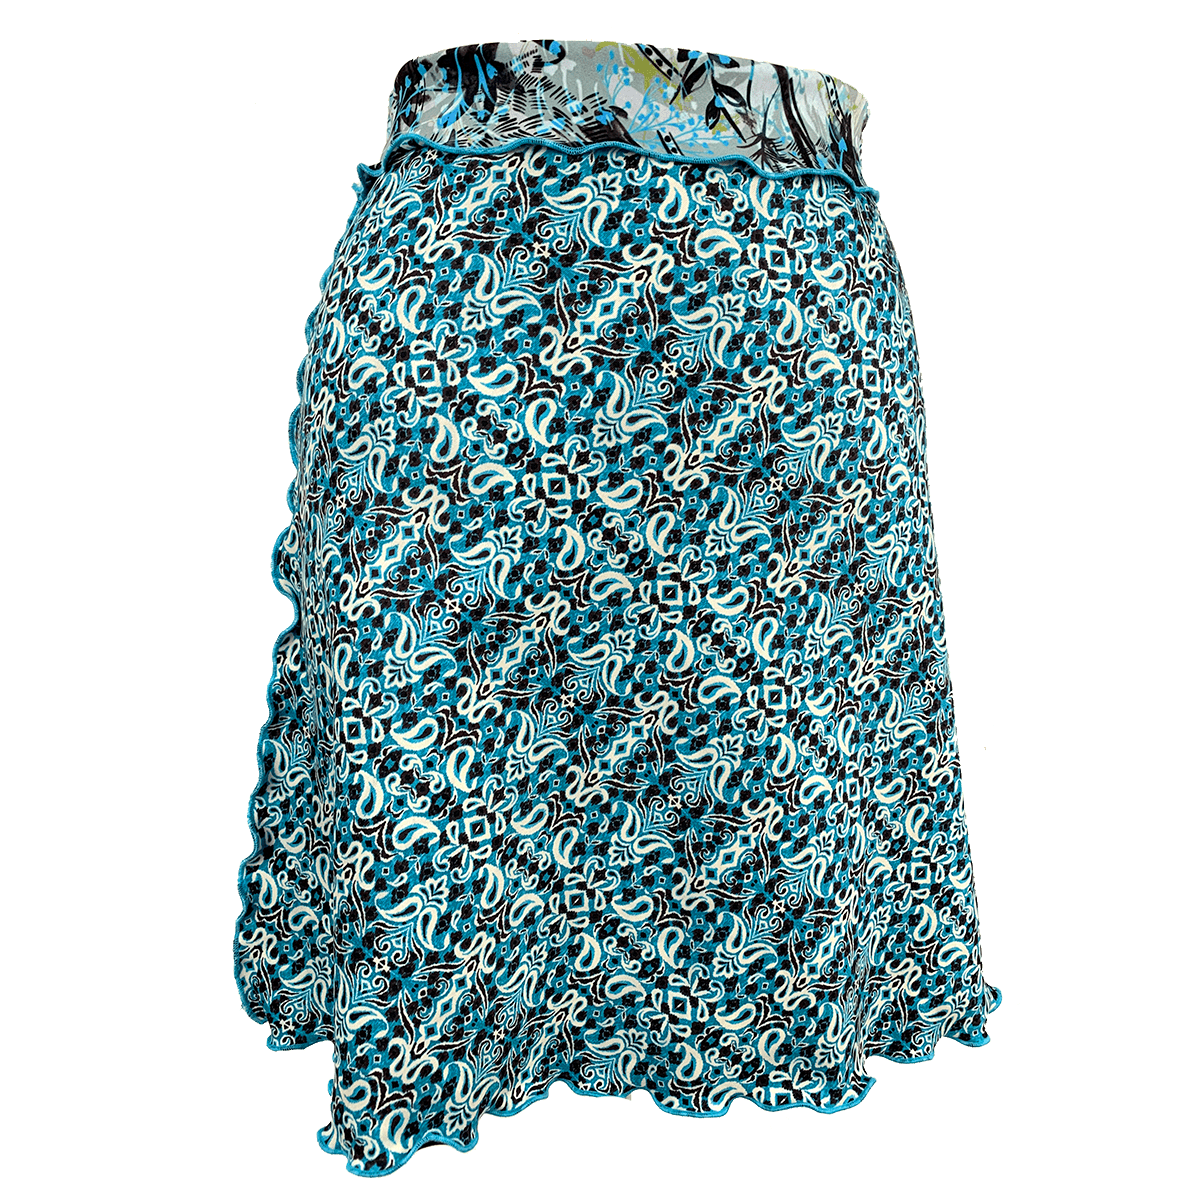 Boca Chica Switchstacks Reversible Bias Skirt